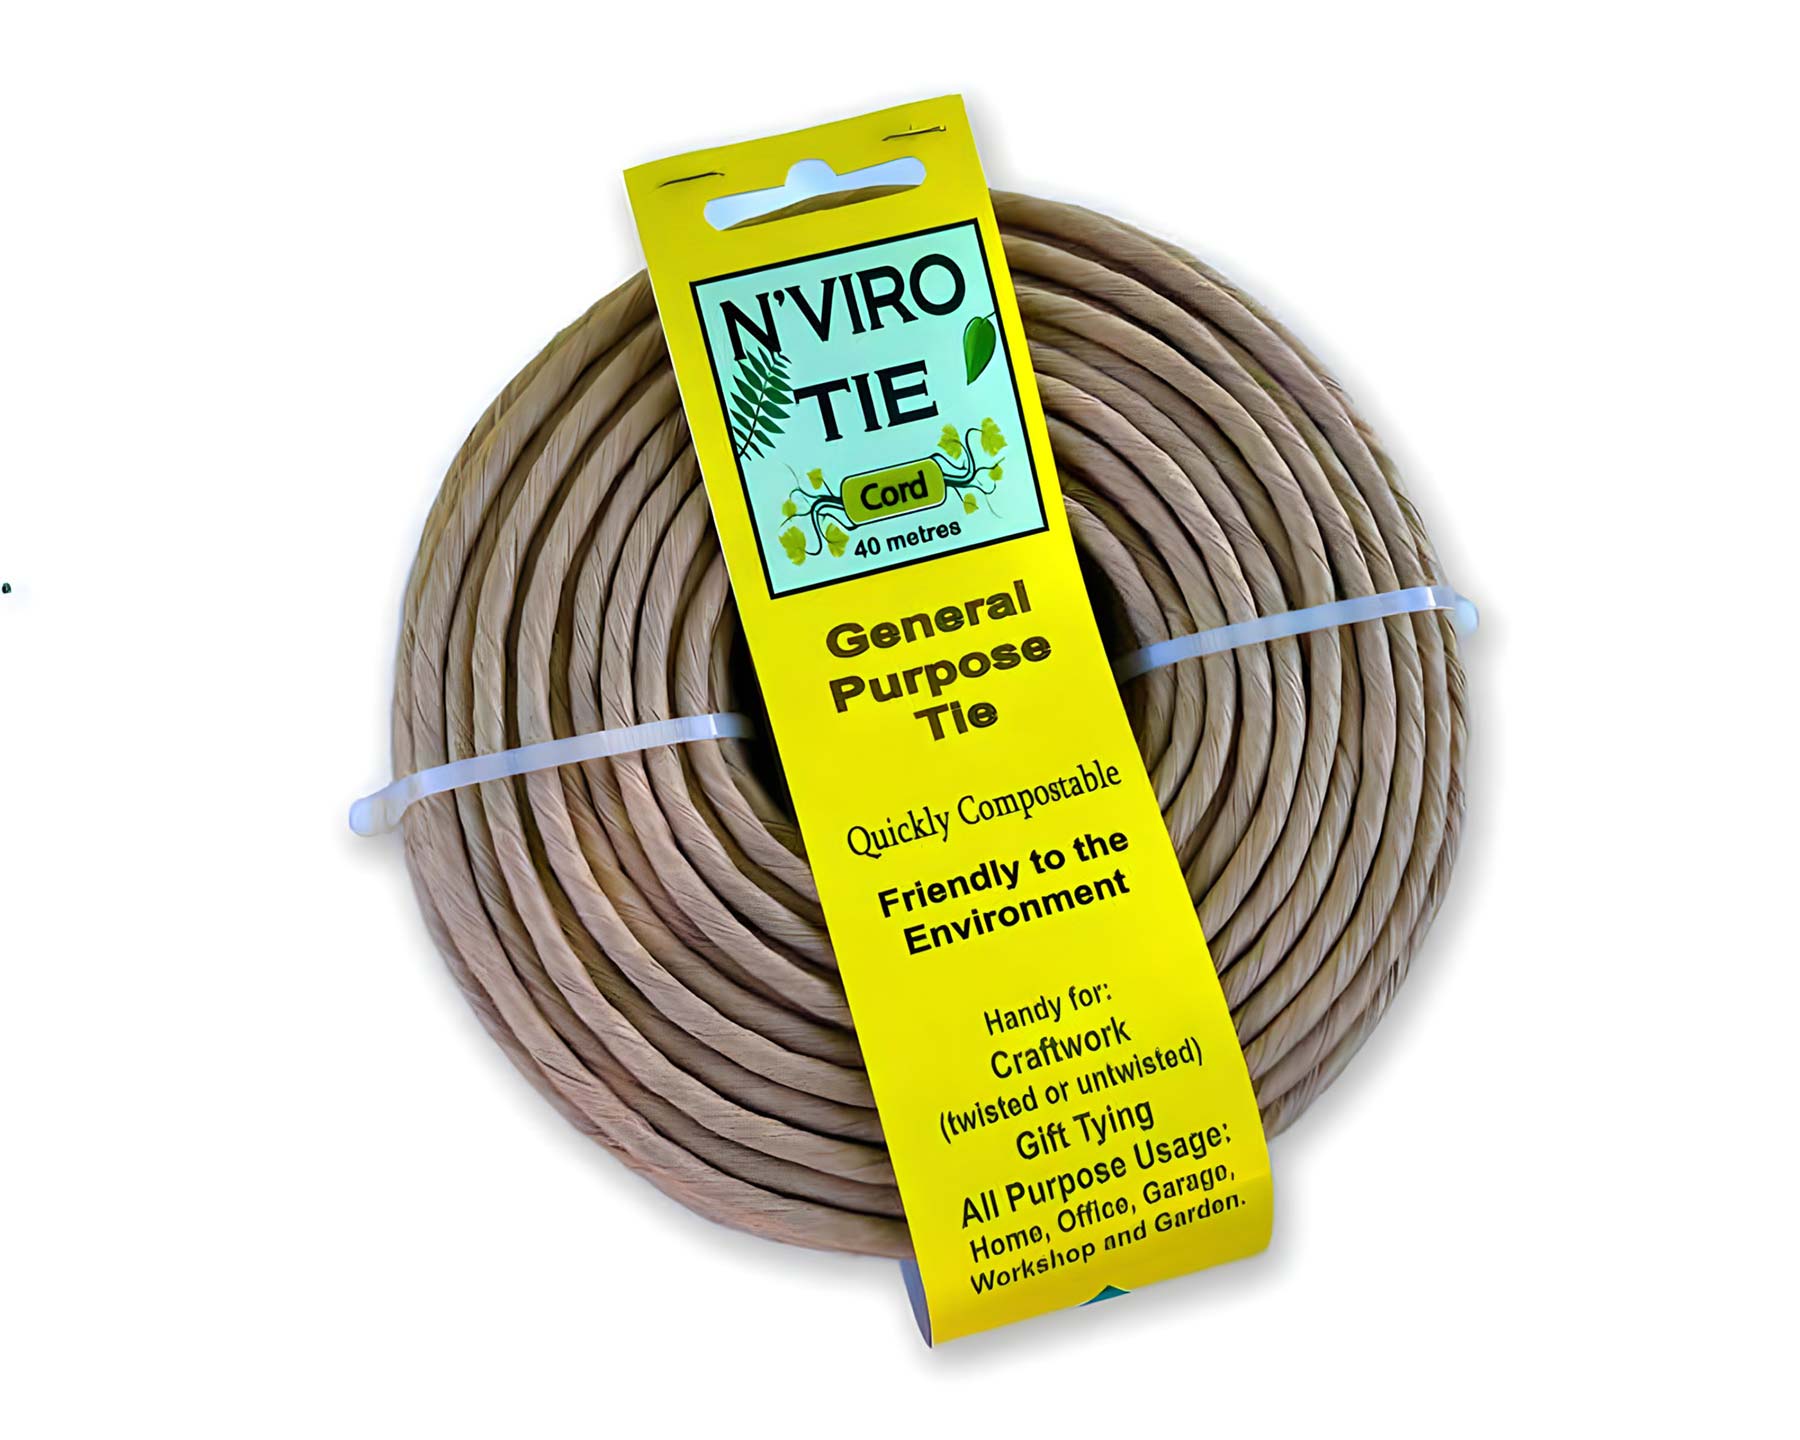 N'viro Tie - 40 meters of biodegradable and compostable twine